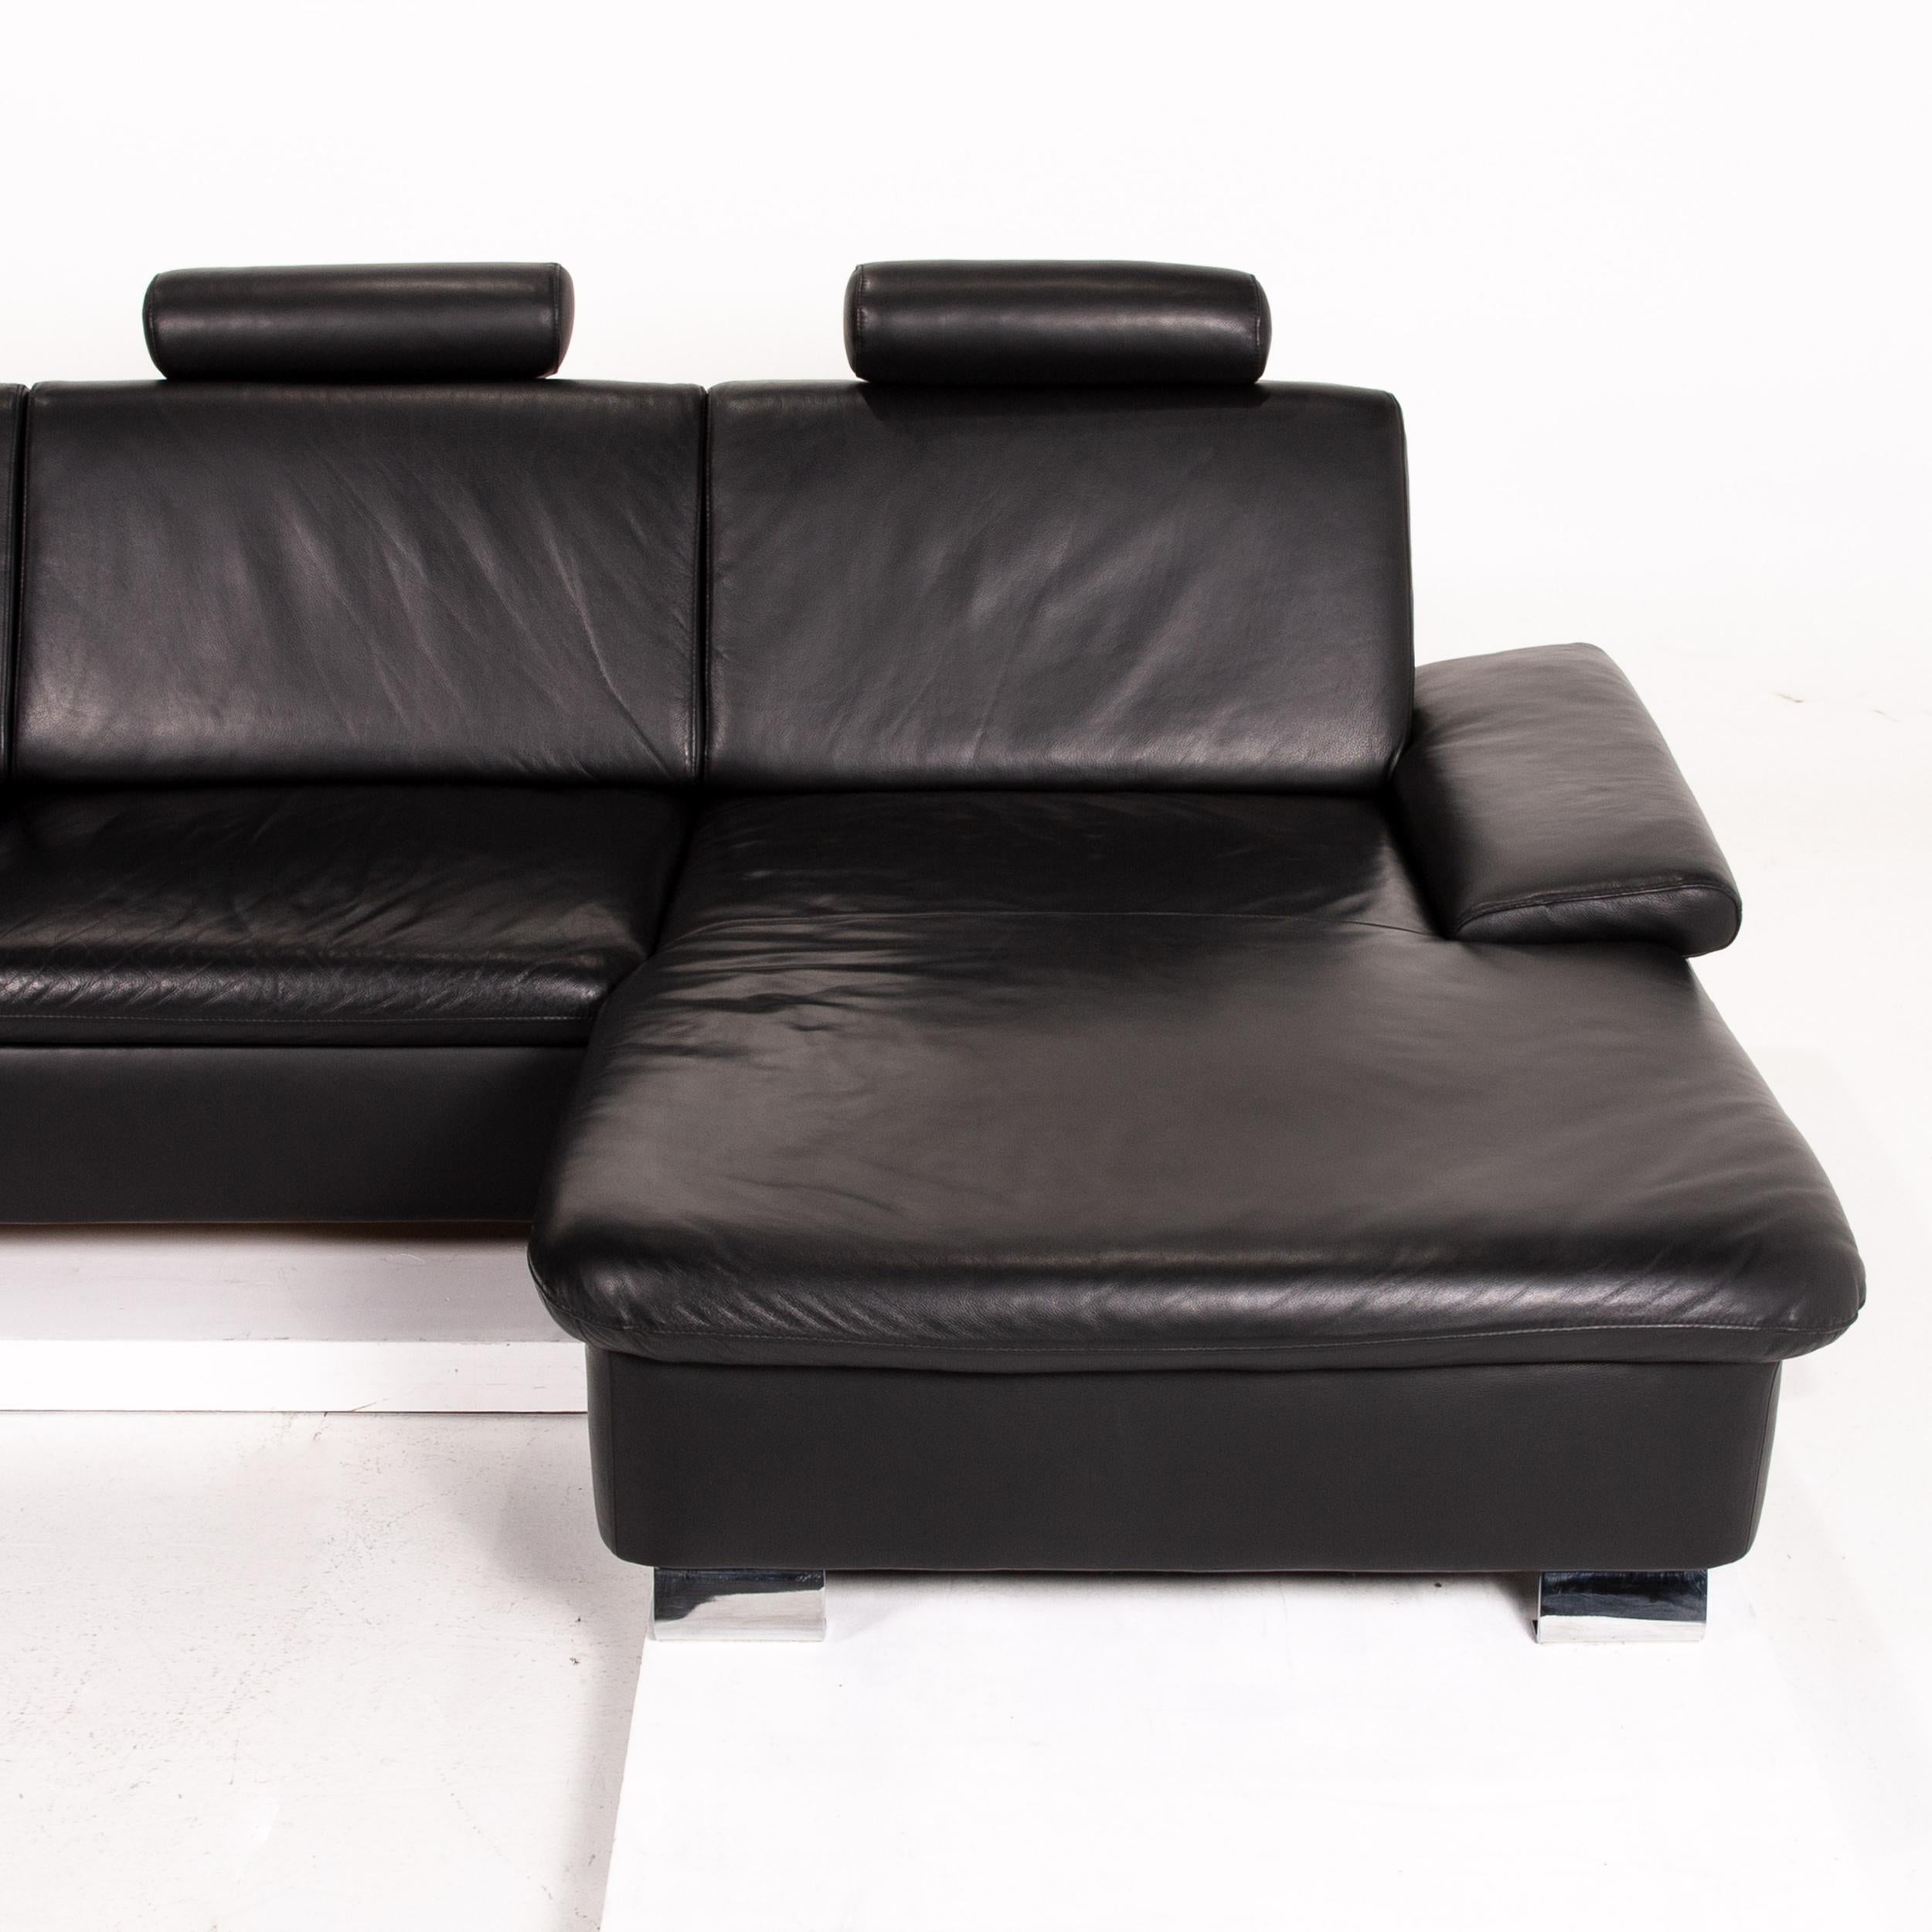 Mondo Leather Corner Sofa Black Sofa Function Sleep Function Sofa Bed Couch For Sale 1